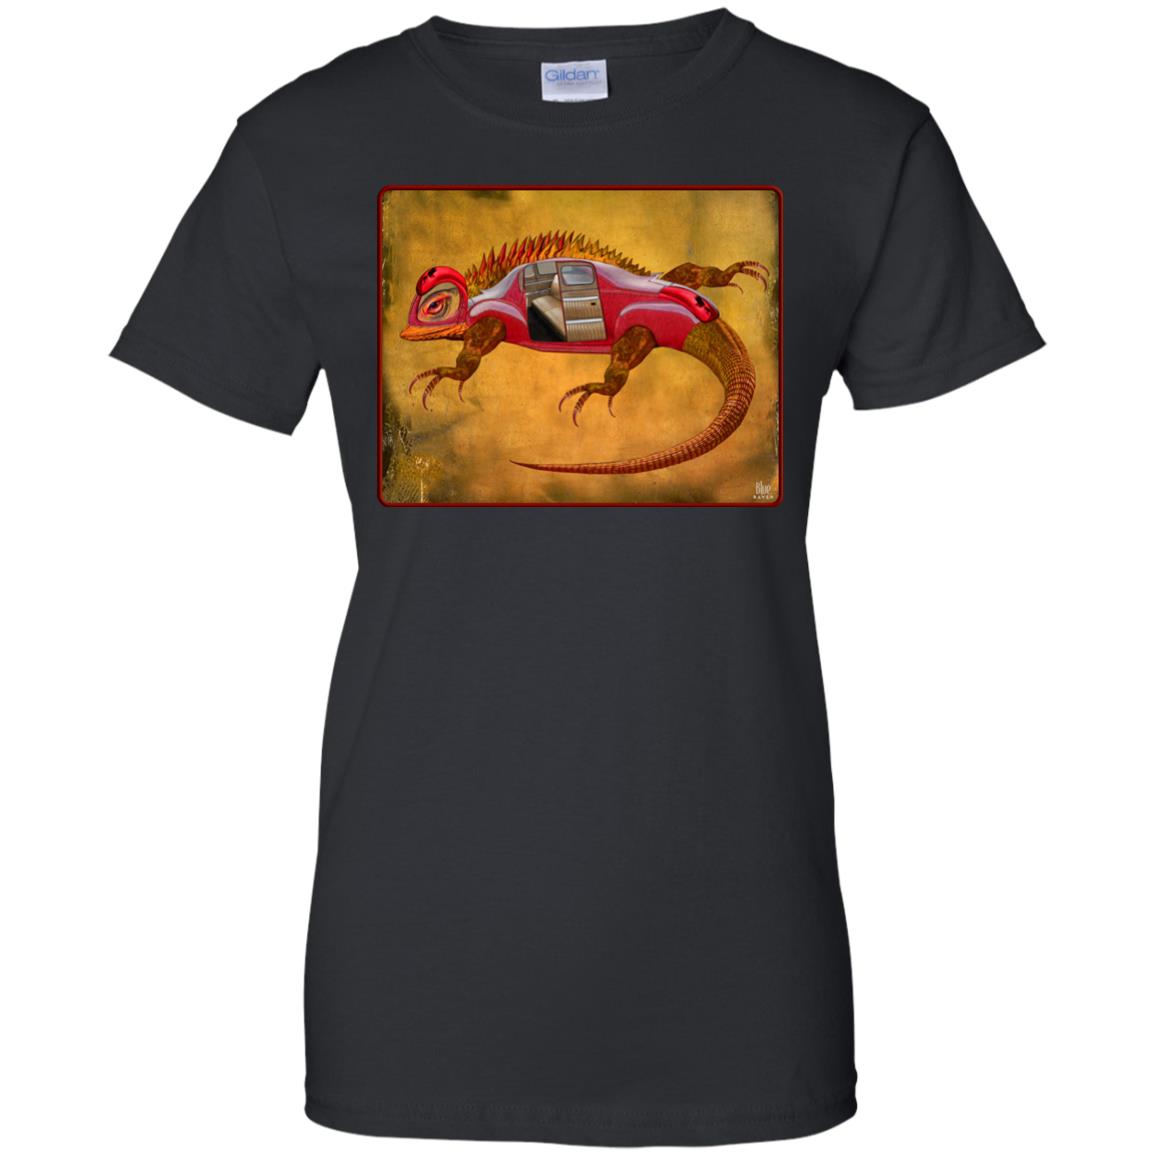 Uber Lizard - red - Women's Relaxed Fit T-Shirt